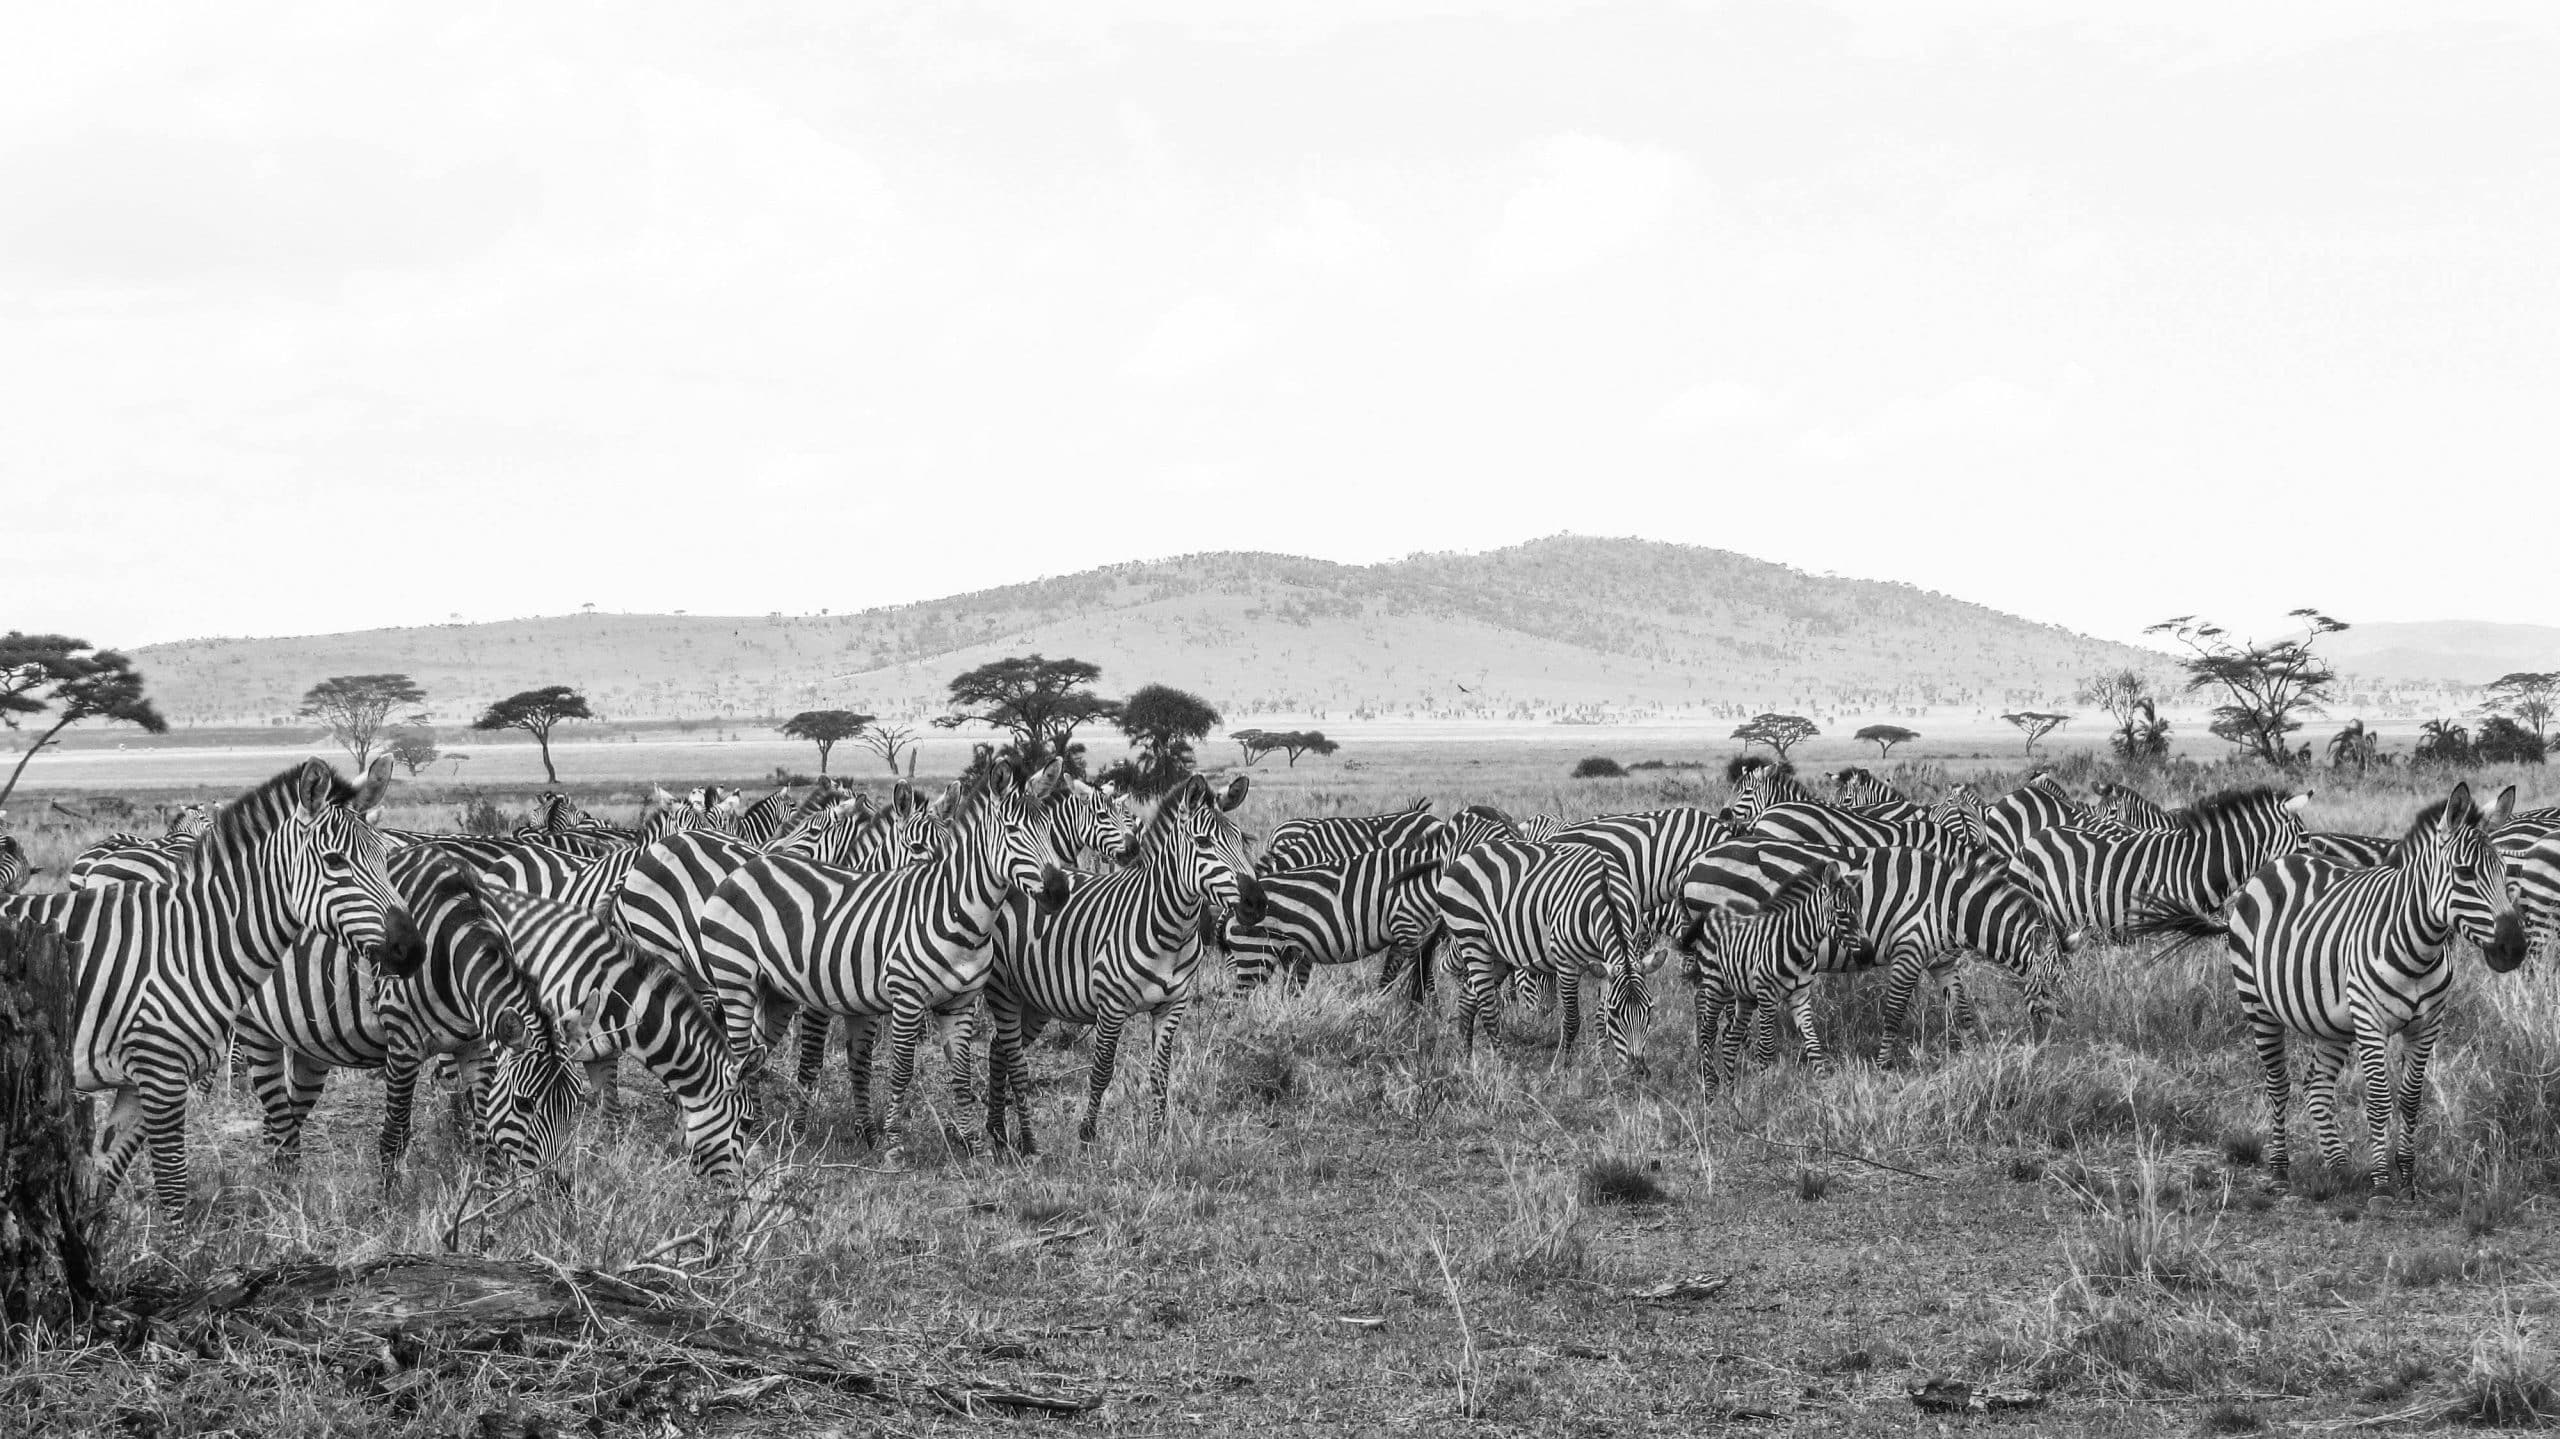 Zebras at The Serengeti National Park